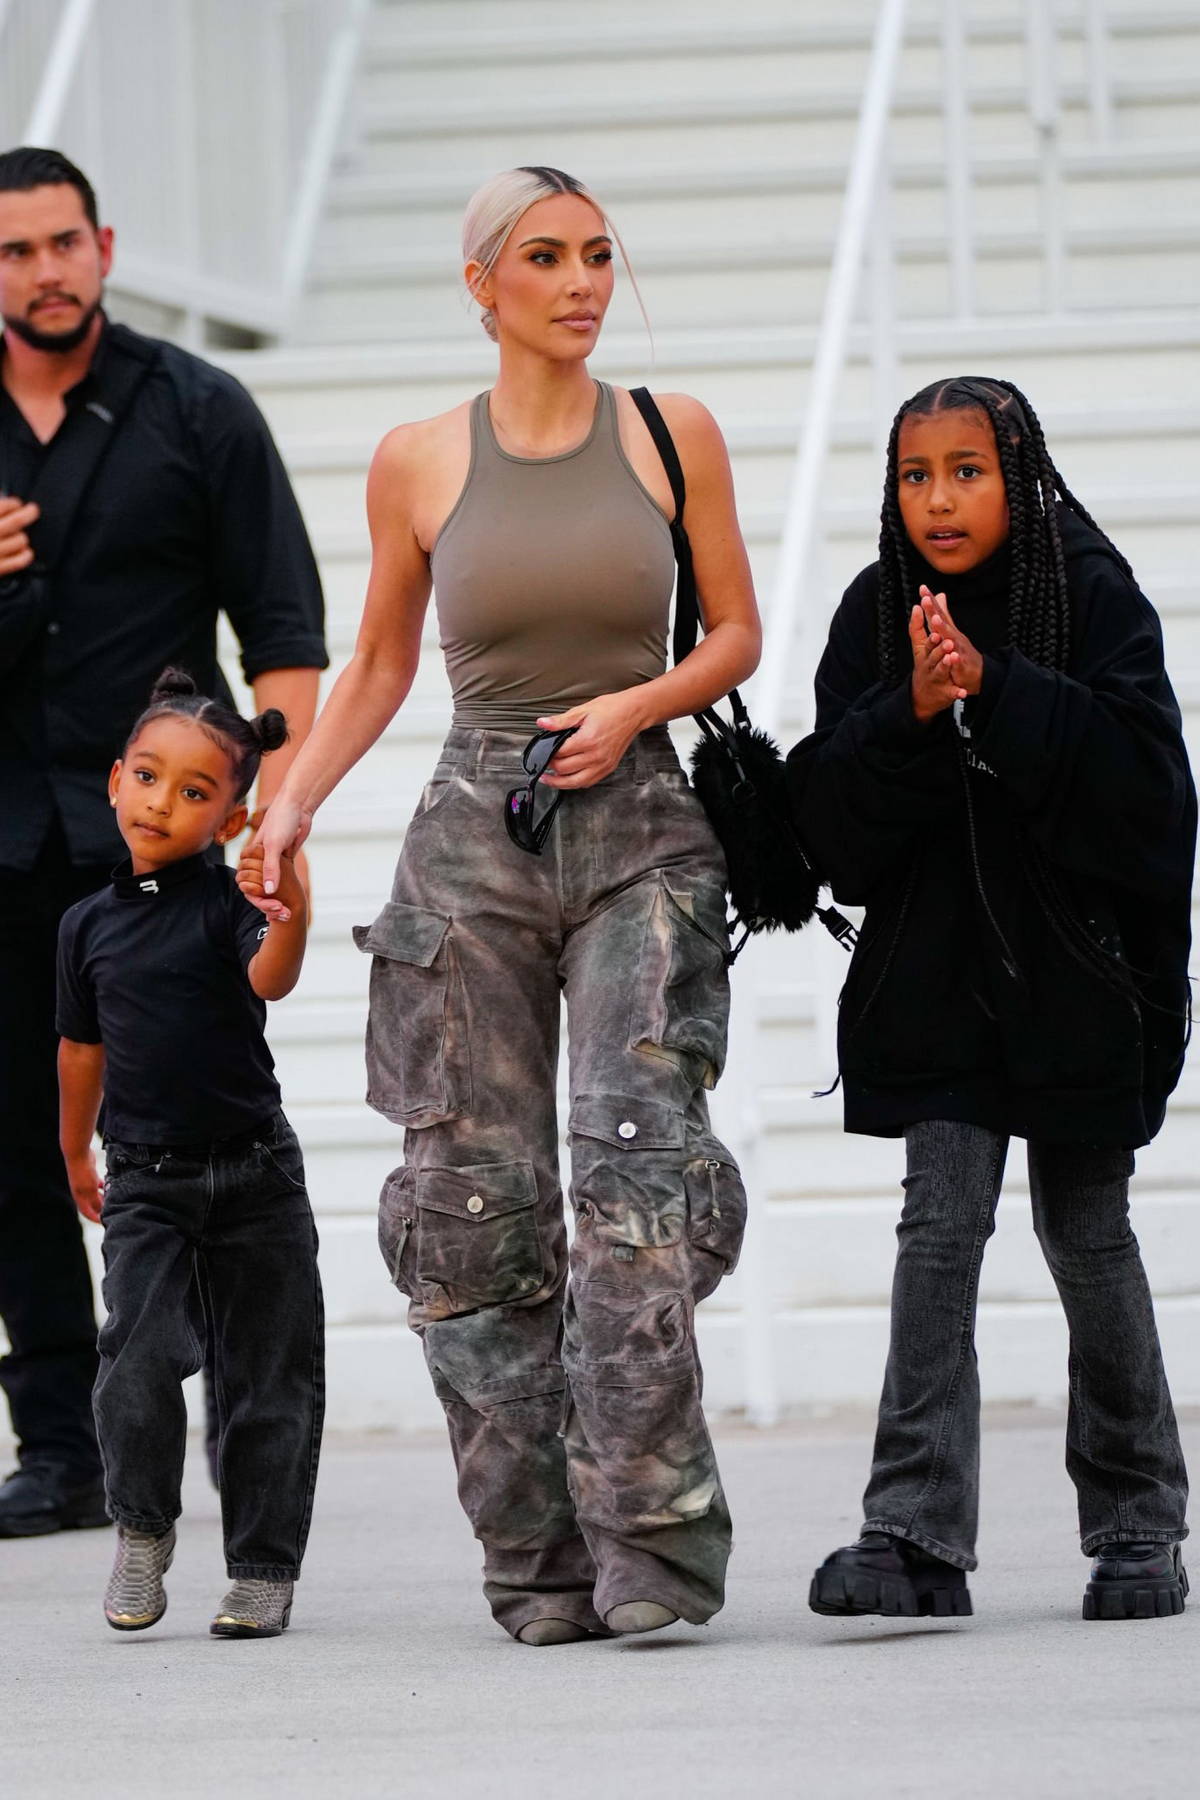 Kim Kardashian rocks a skin-tight tank top and stone-washed cargo